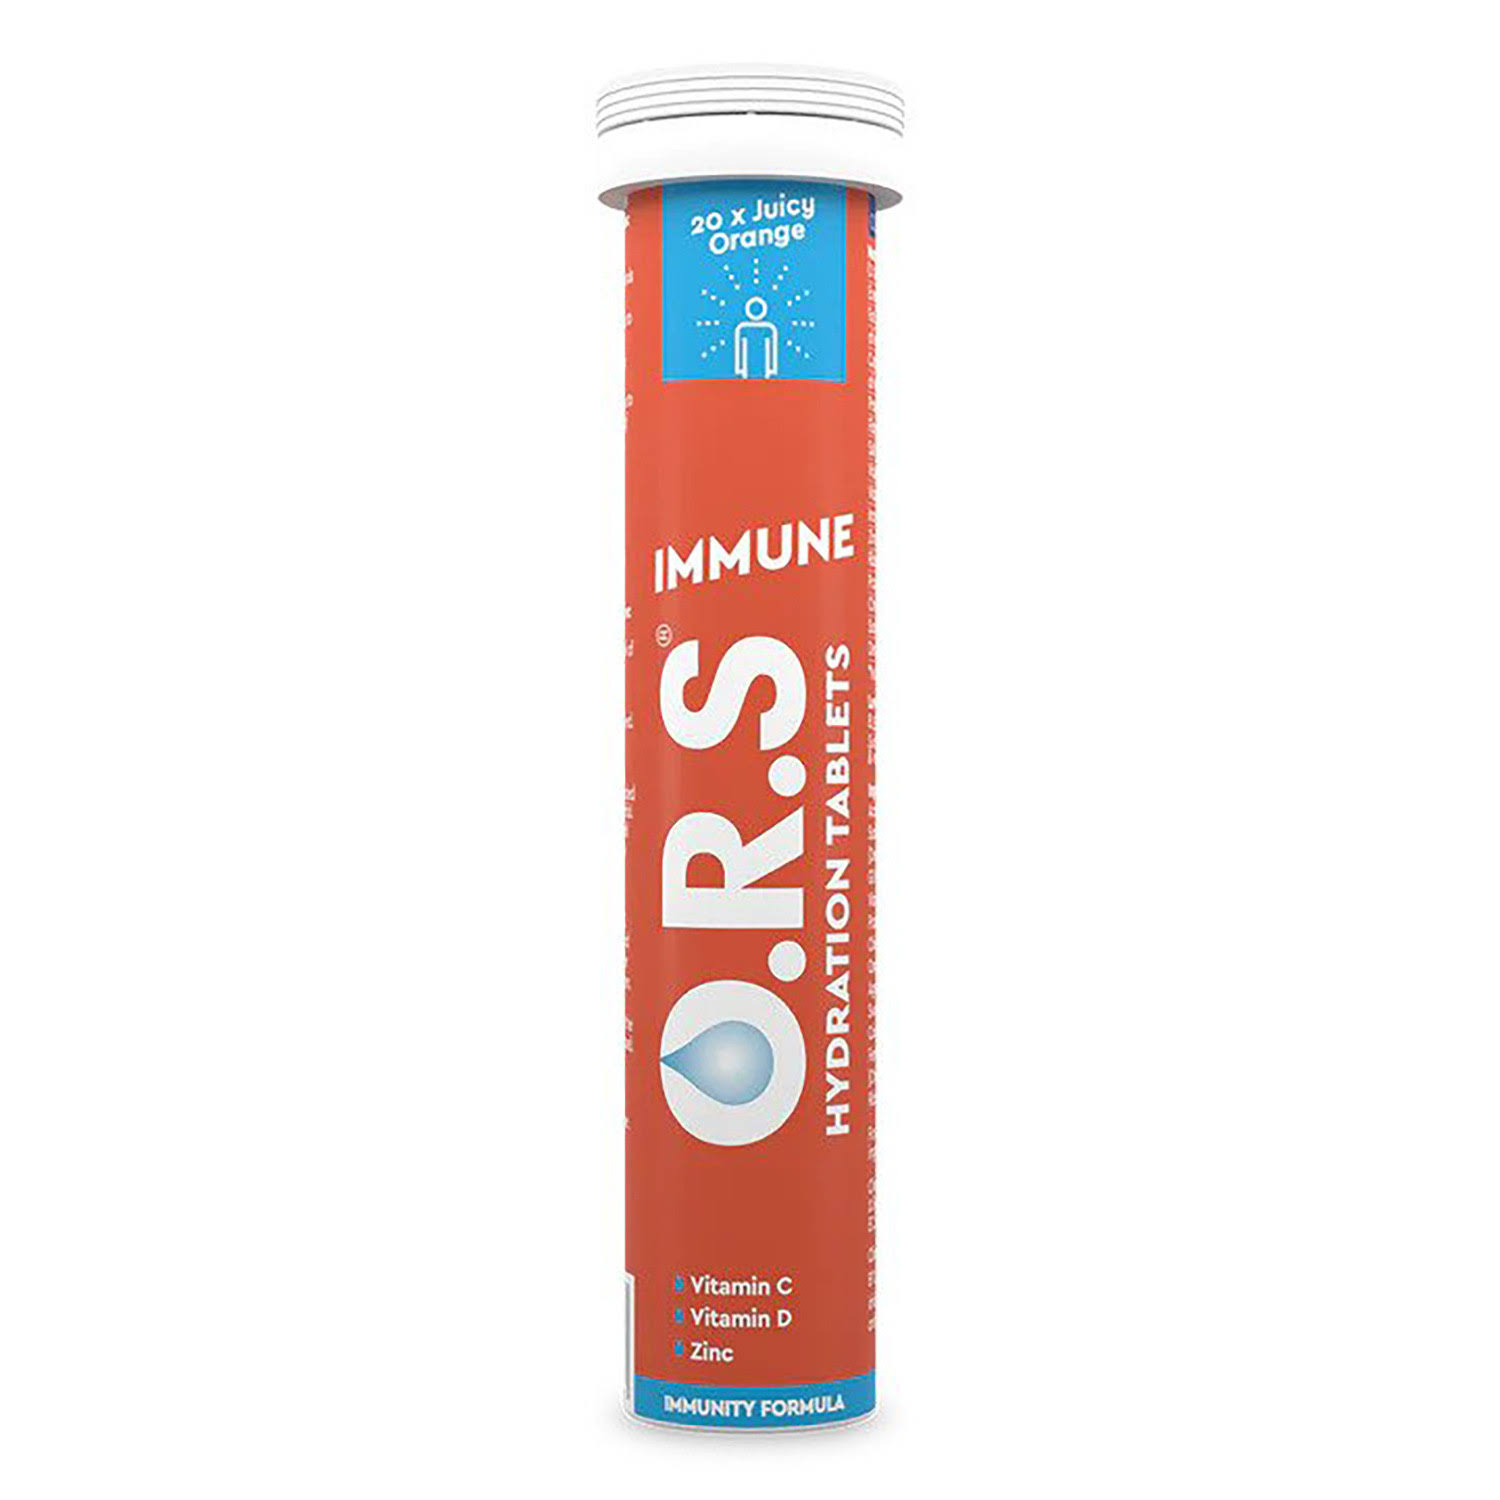 O.R.S Immune Hydration Orange Flavour 20 Tablets